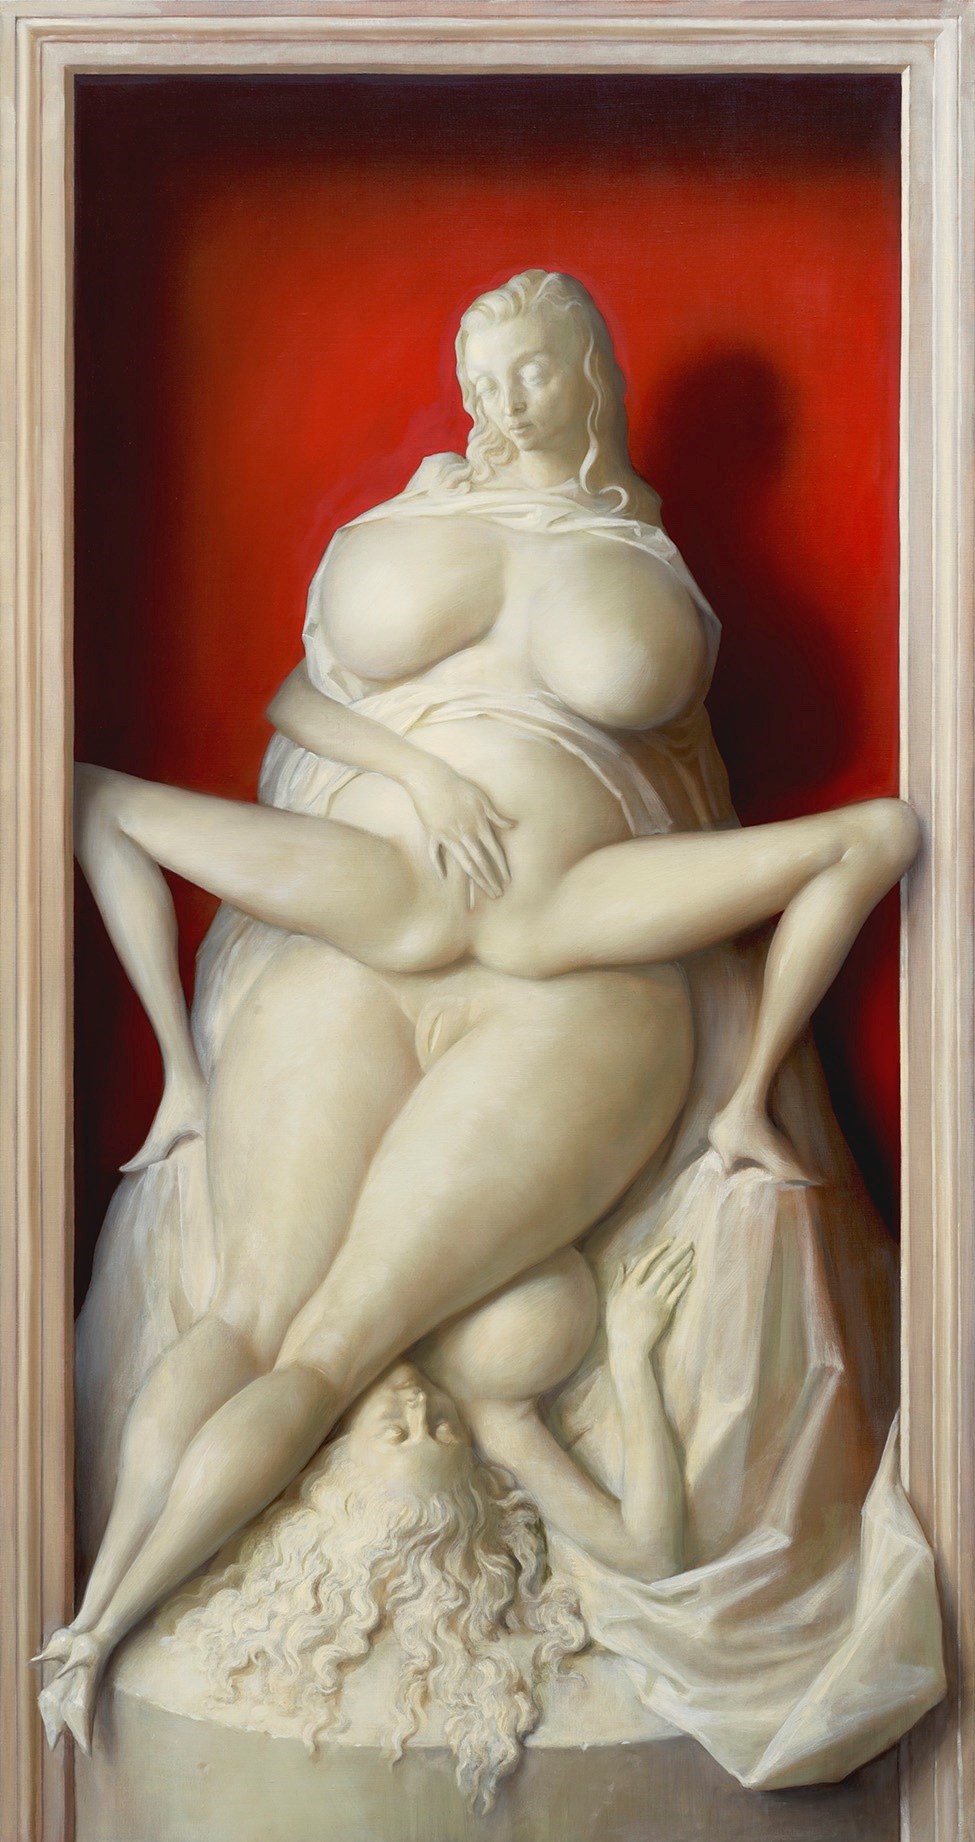 Art Pron - John Currin captures the desolate mood of porn as classical art | Dazed